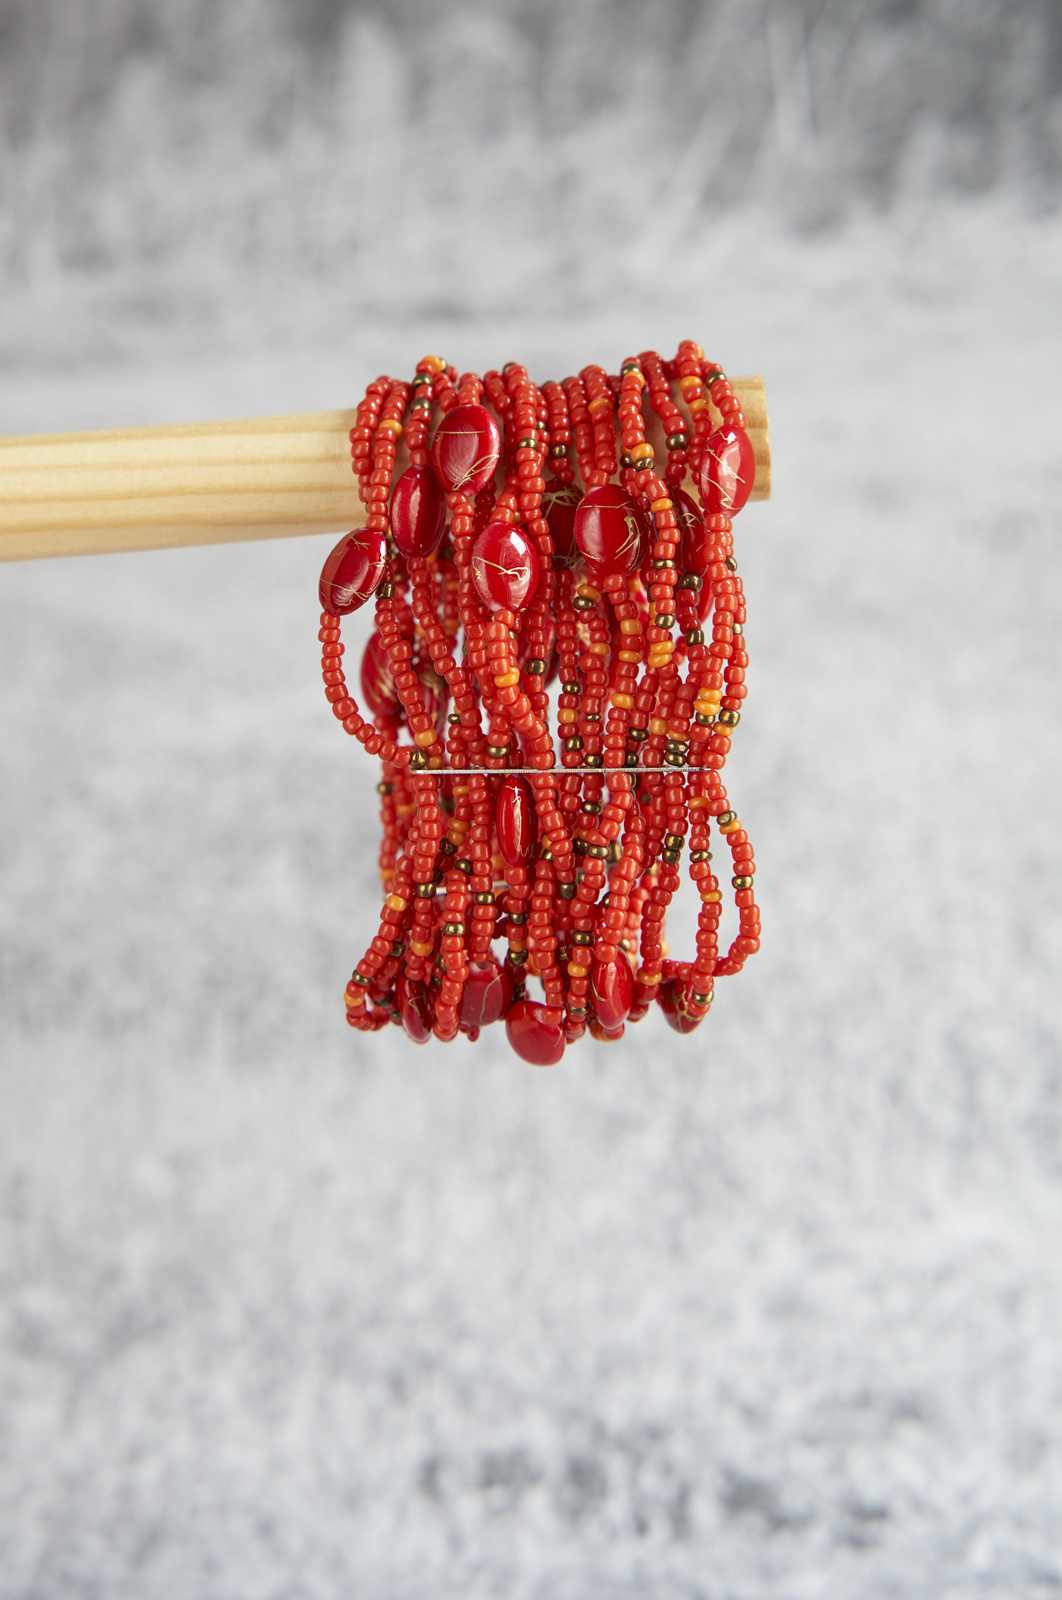 Bracelet - rows of beads